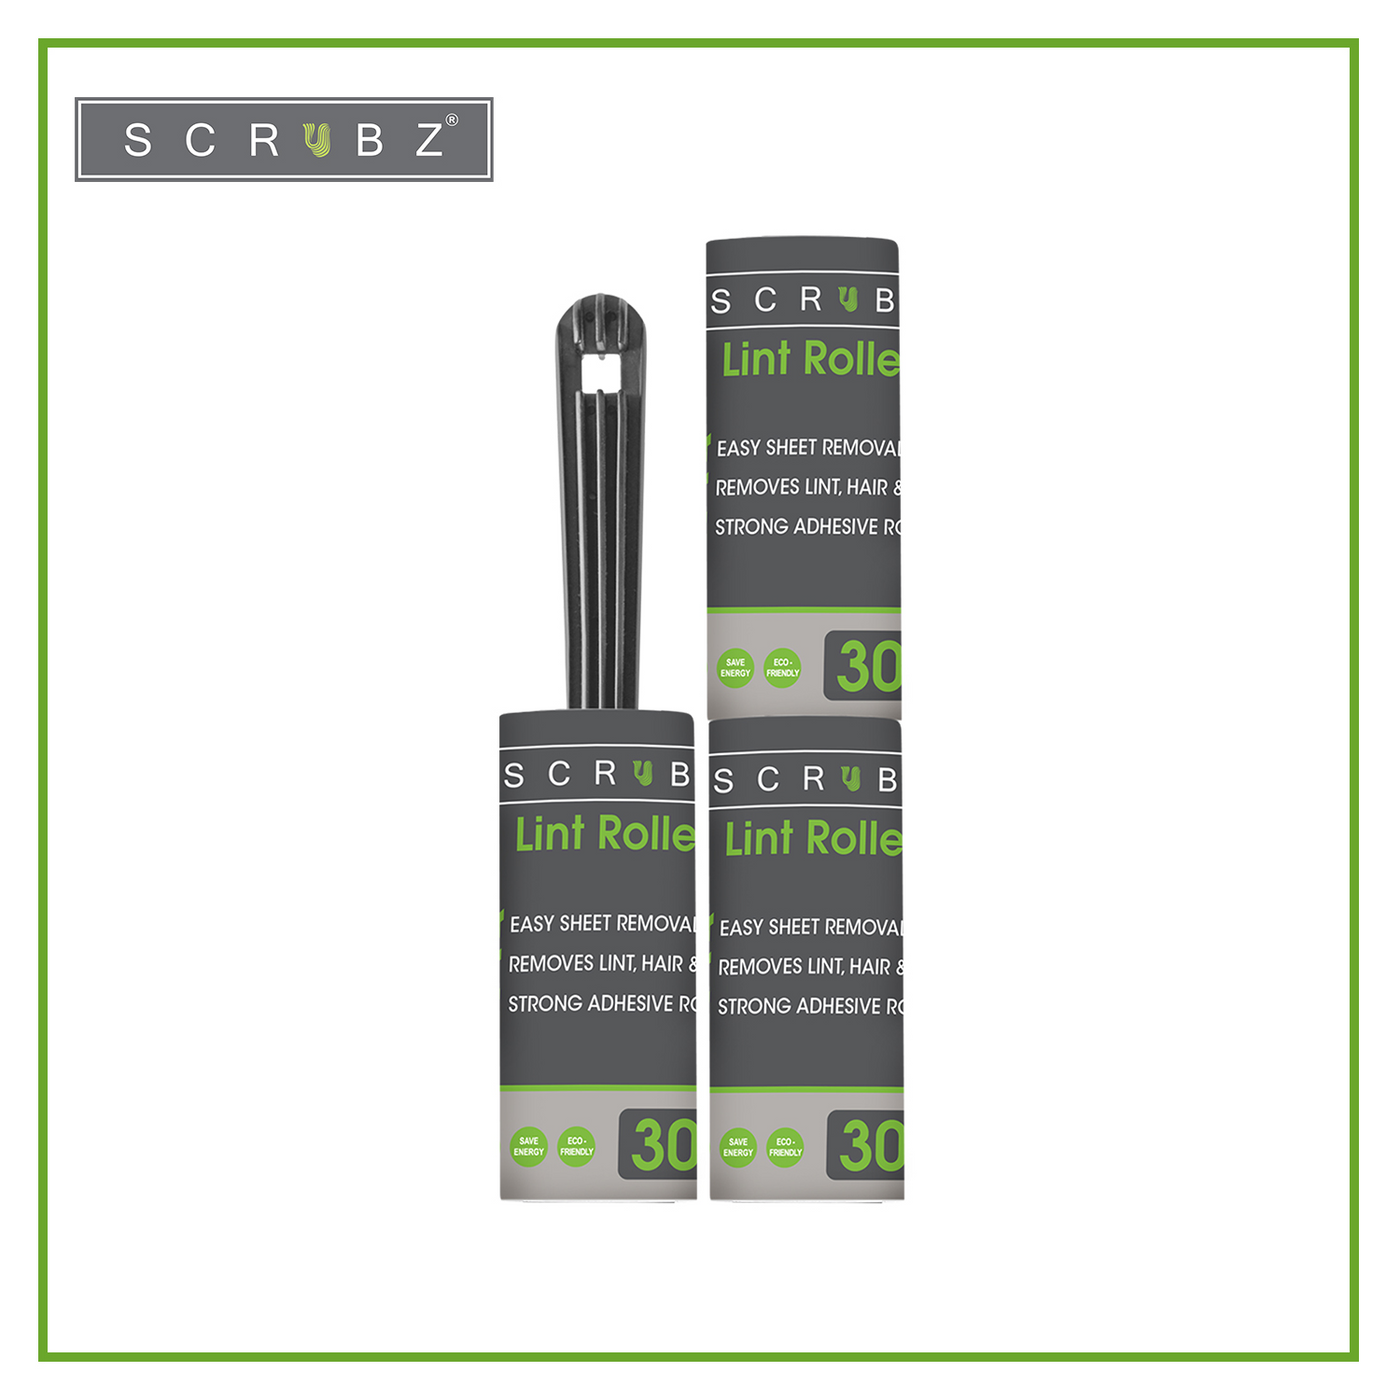 SCRUBZ Premium Lint Roller Set of 3